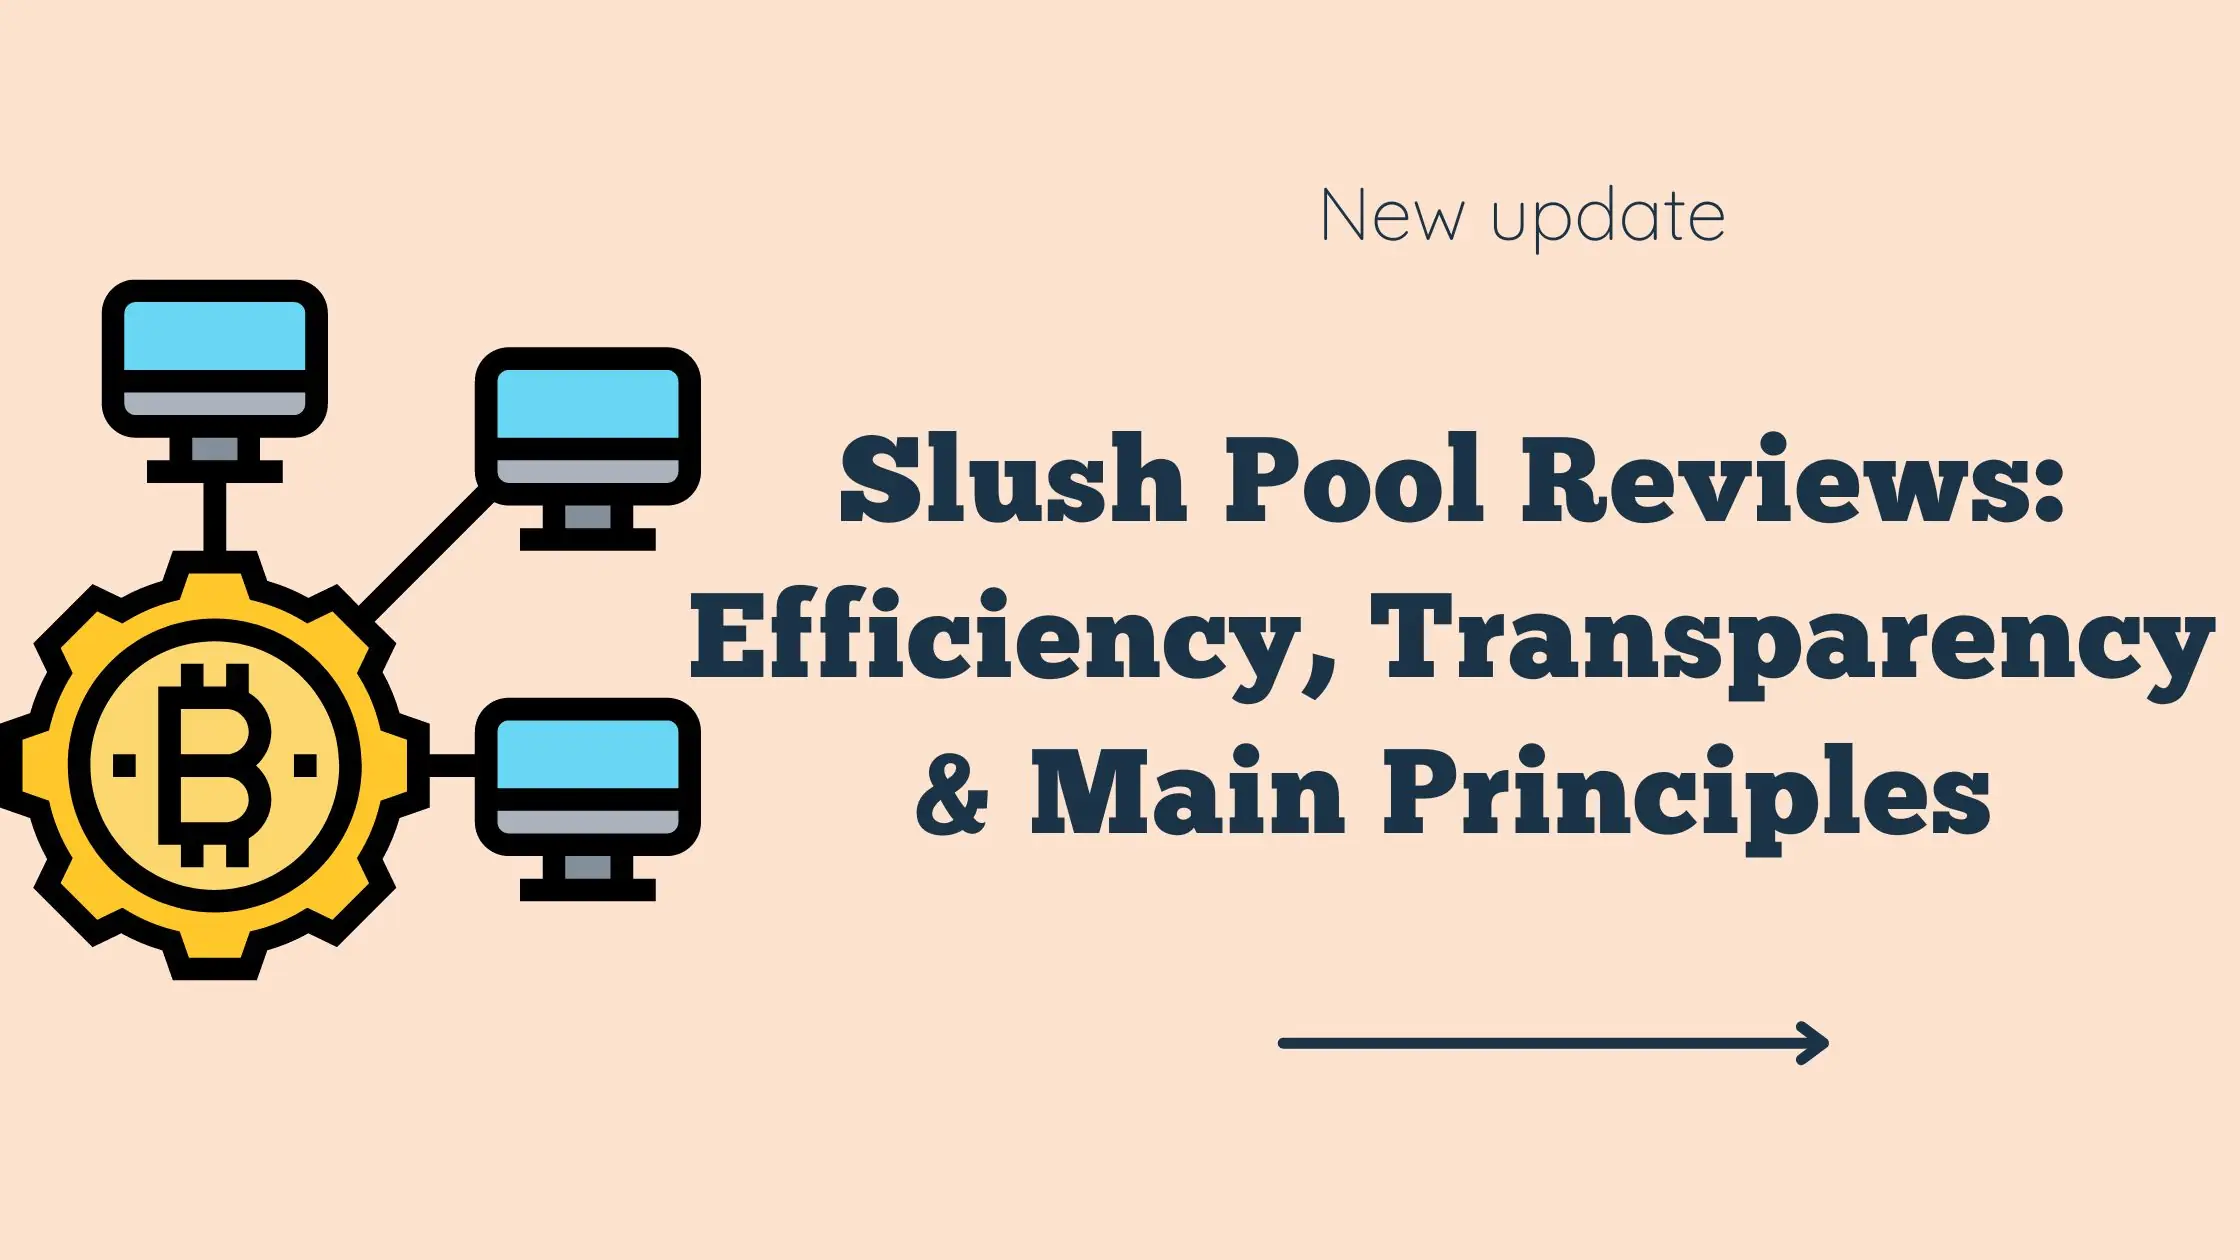 Slush Pool Reviews: Efficiency, Transparency & Main Principles